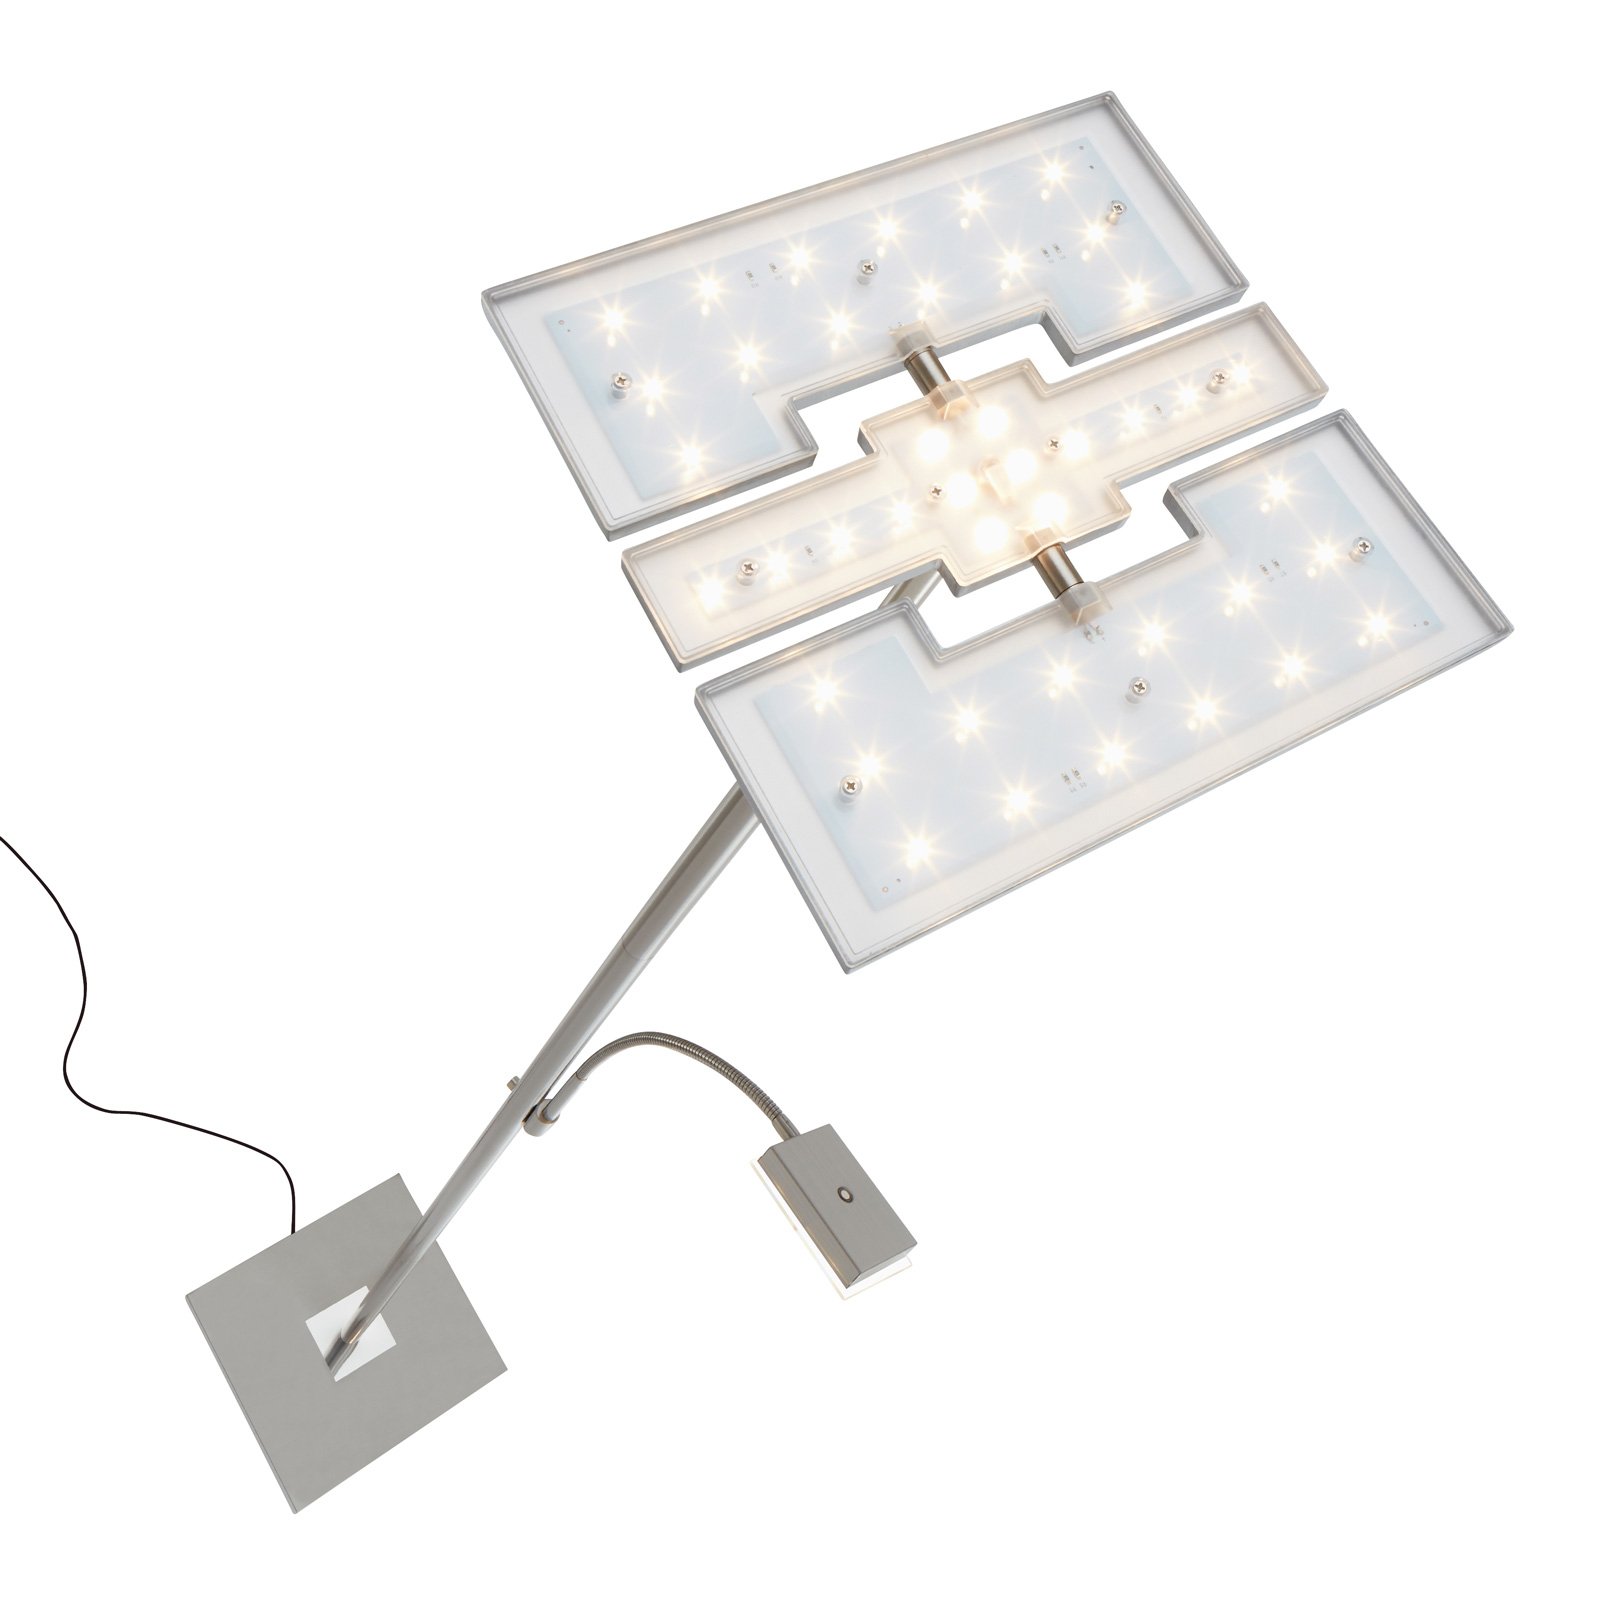 LED stropné svietidlo Floor 1328-022, hranaté, čítacie rameno